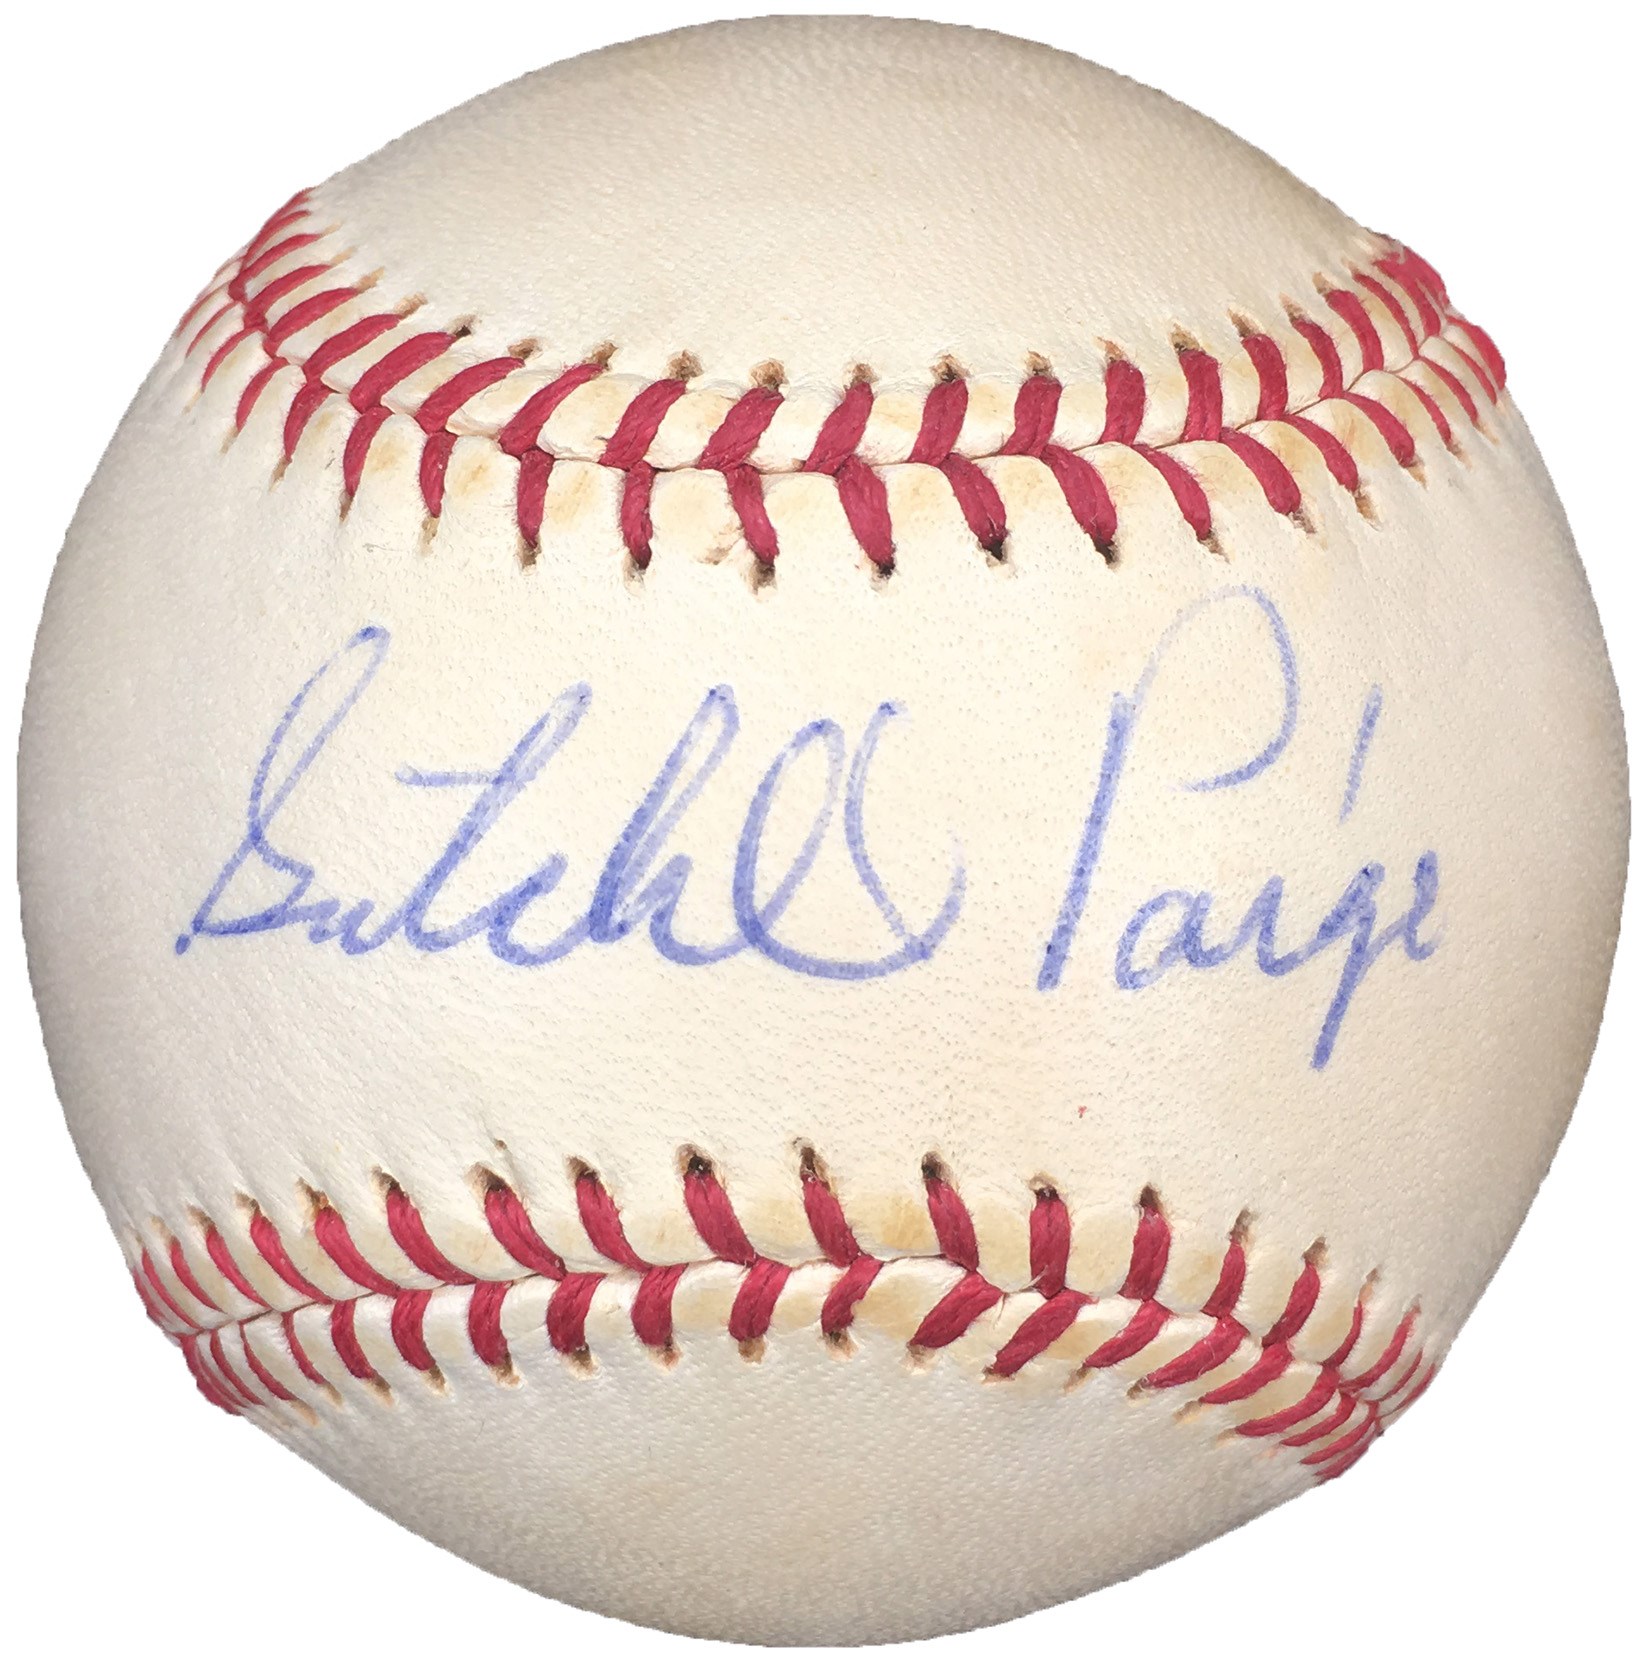 Outstanding Satchel Paige Single-Signed Baseball w/Tremendous Provenance (PSA)